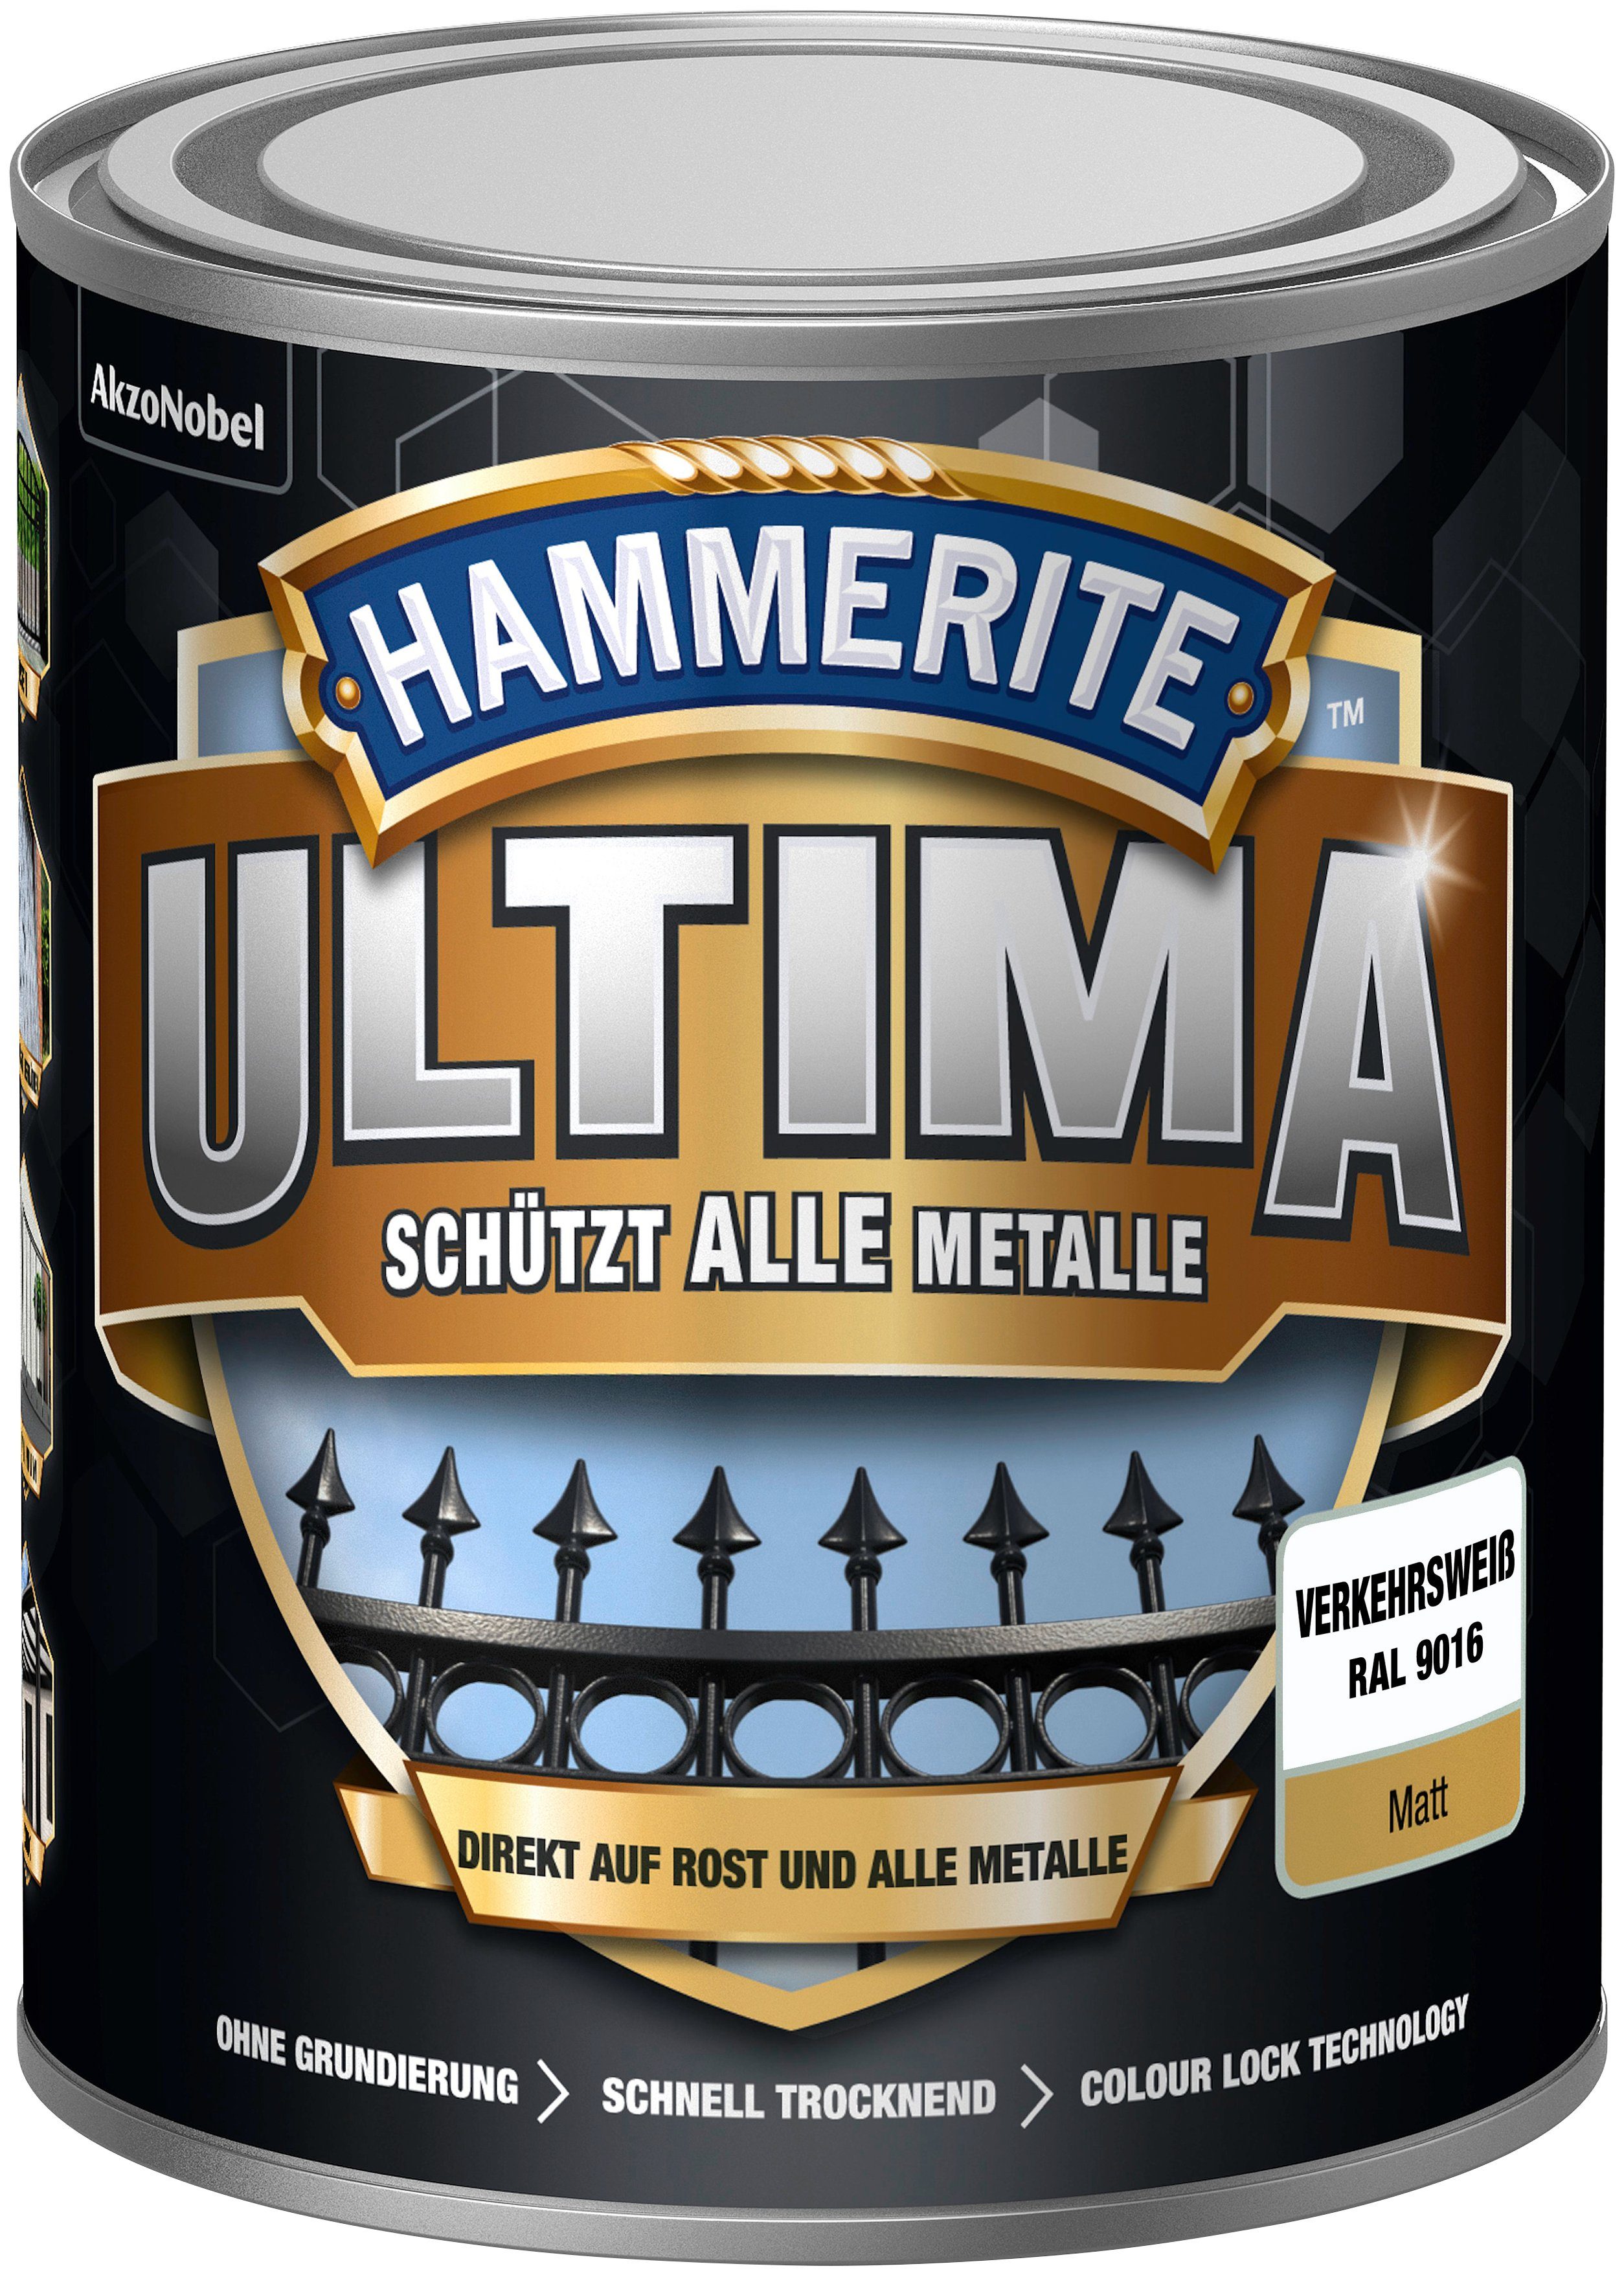 Metalle, 9016, matt RAL Hammerite  alle Metallschutzlack 3in1, ULTIMA schützt verkehrsweiss